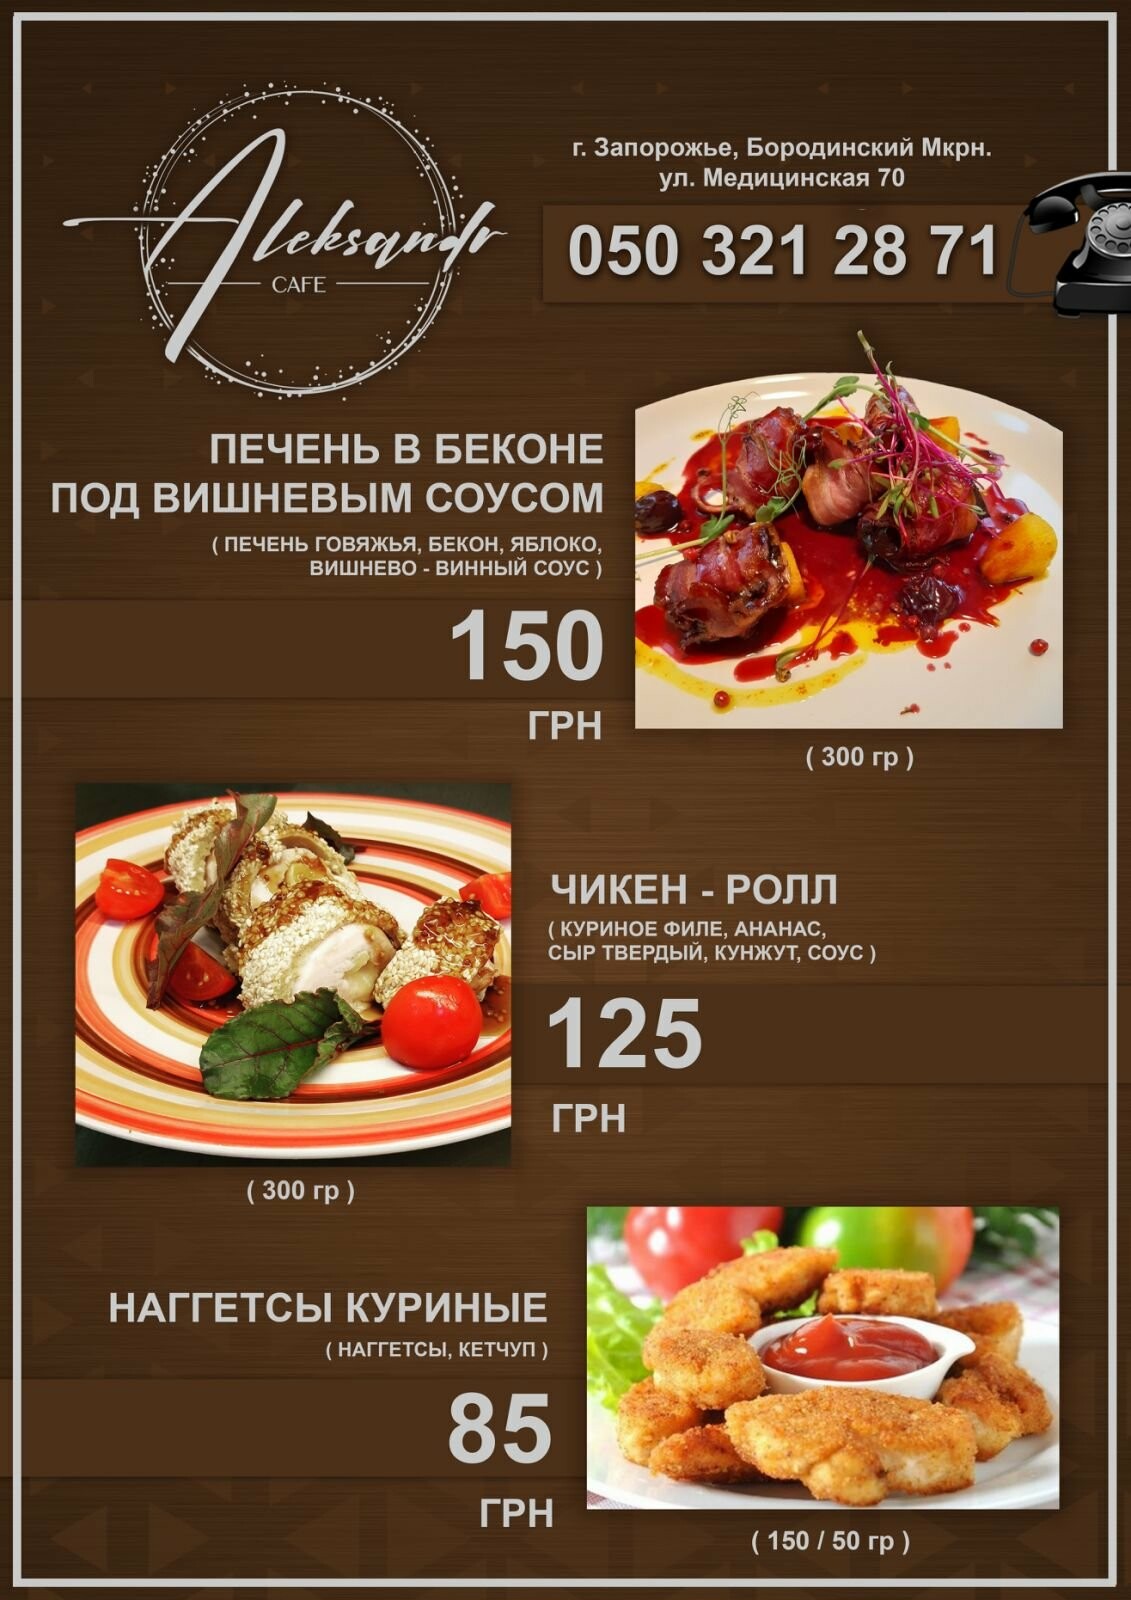 Доставка еды в Запорожье кафе Александр, фото-13